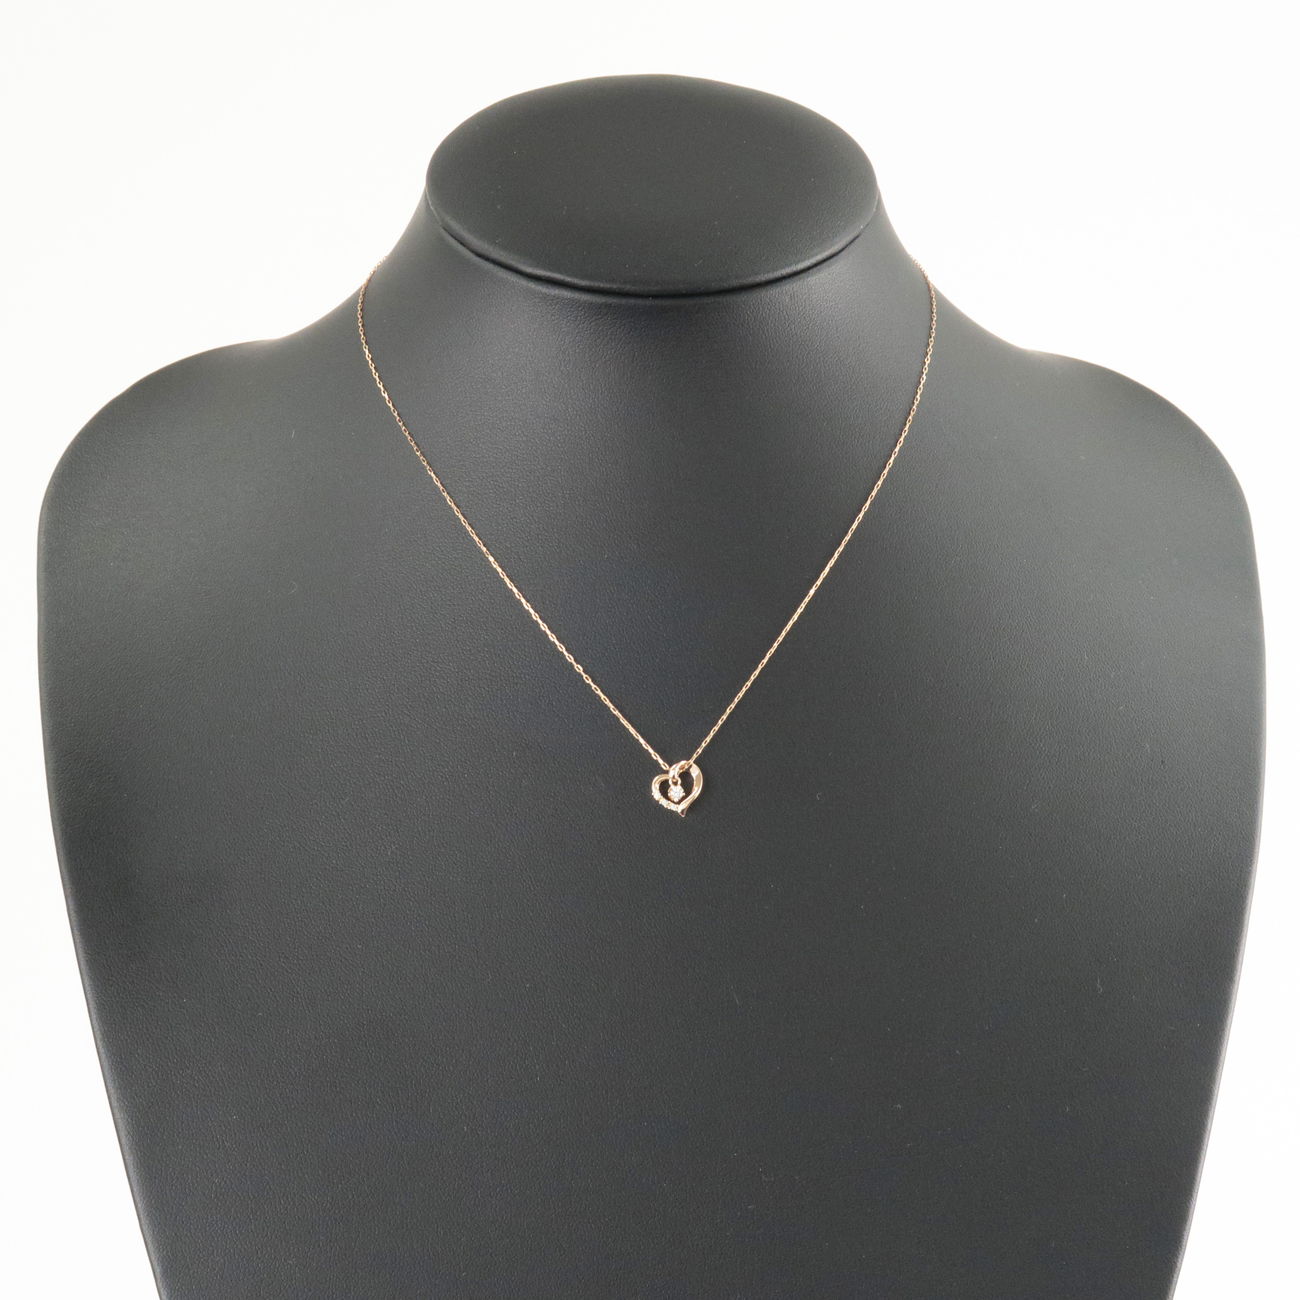 4℃-Heart-Charm-4P-Diamond-Necklace-K18PG-750PG-Rose-Gold – dct